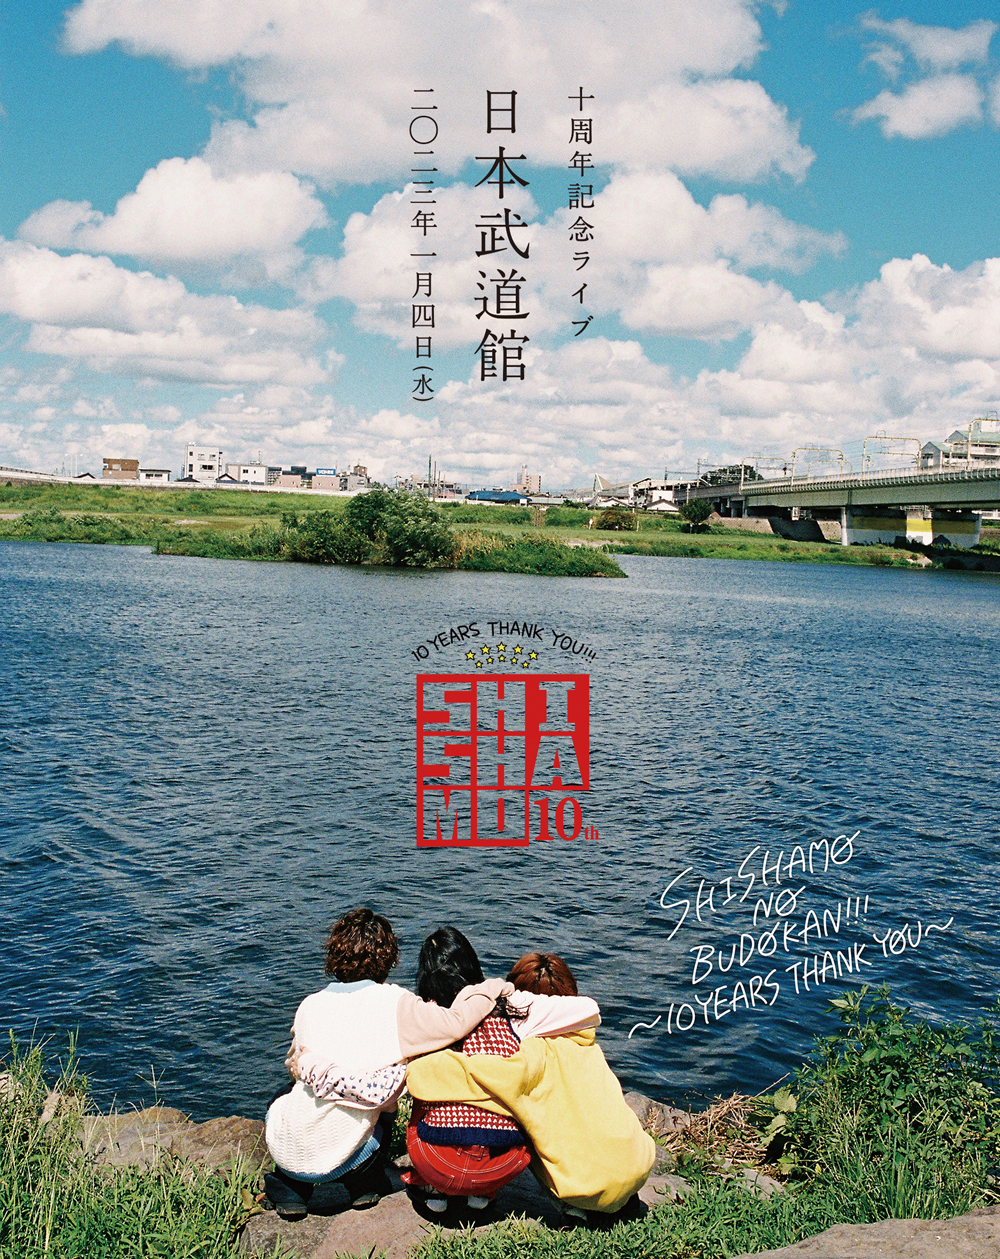 Blu-ray Disc「SHISHAMO NO BUDOKAN!!! 〜10YEARS THANK YOU〜」06.28(水)リリース決定!!!｜ SHISHAMO Official Website